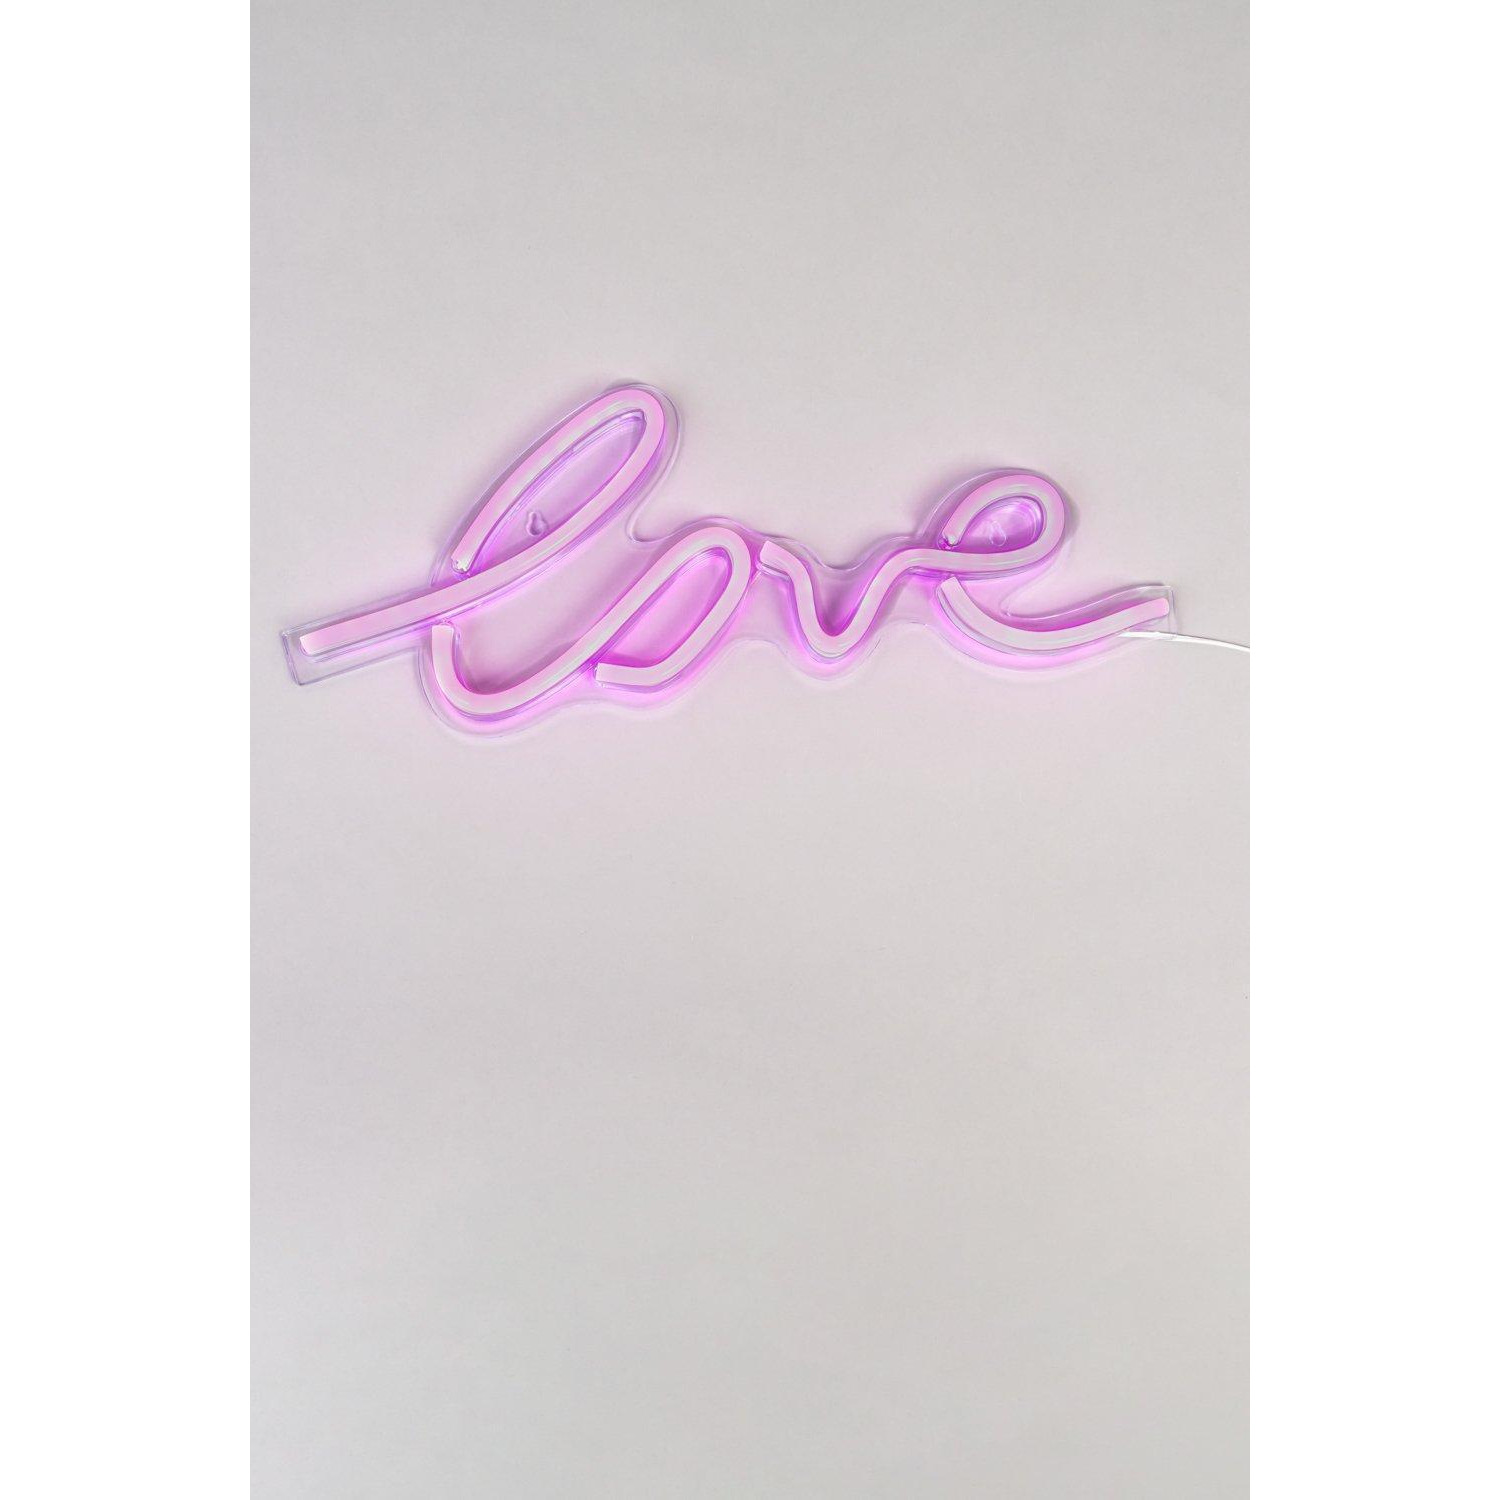 Glow Love Neon Wall Light - image 1